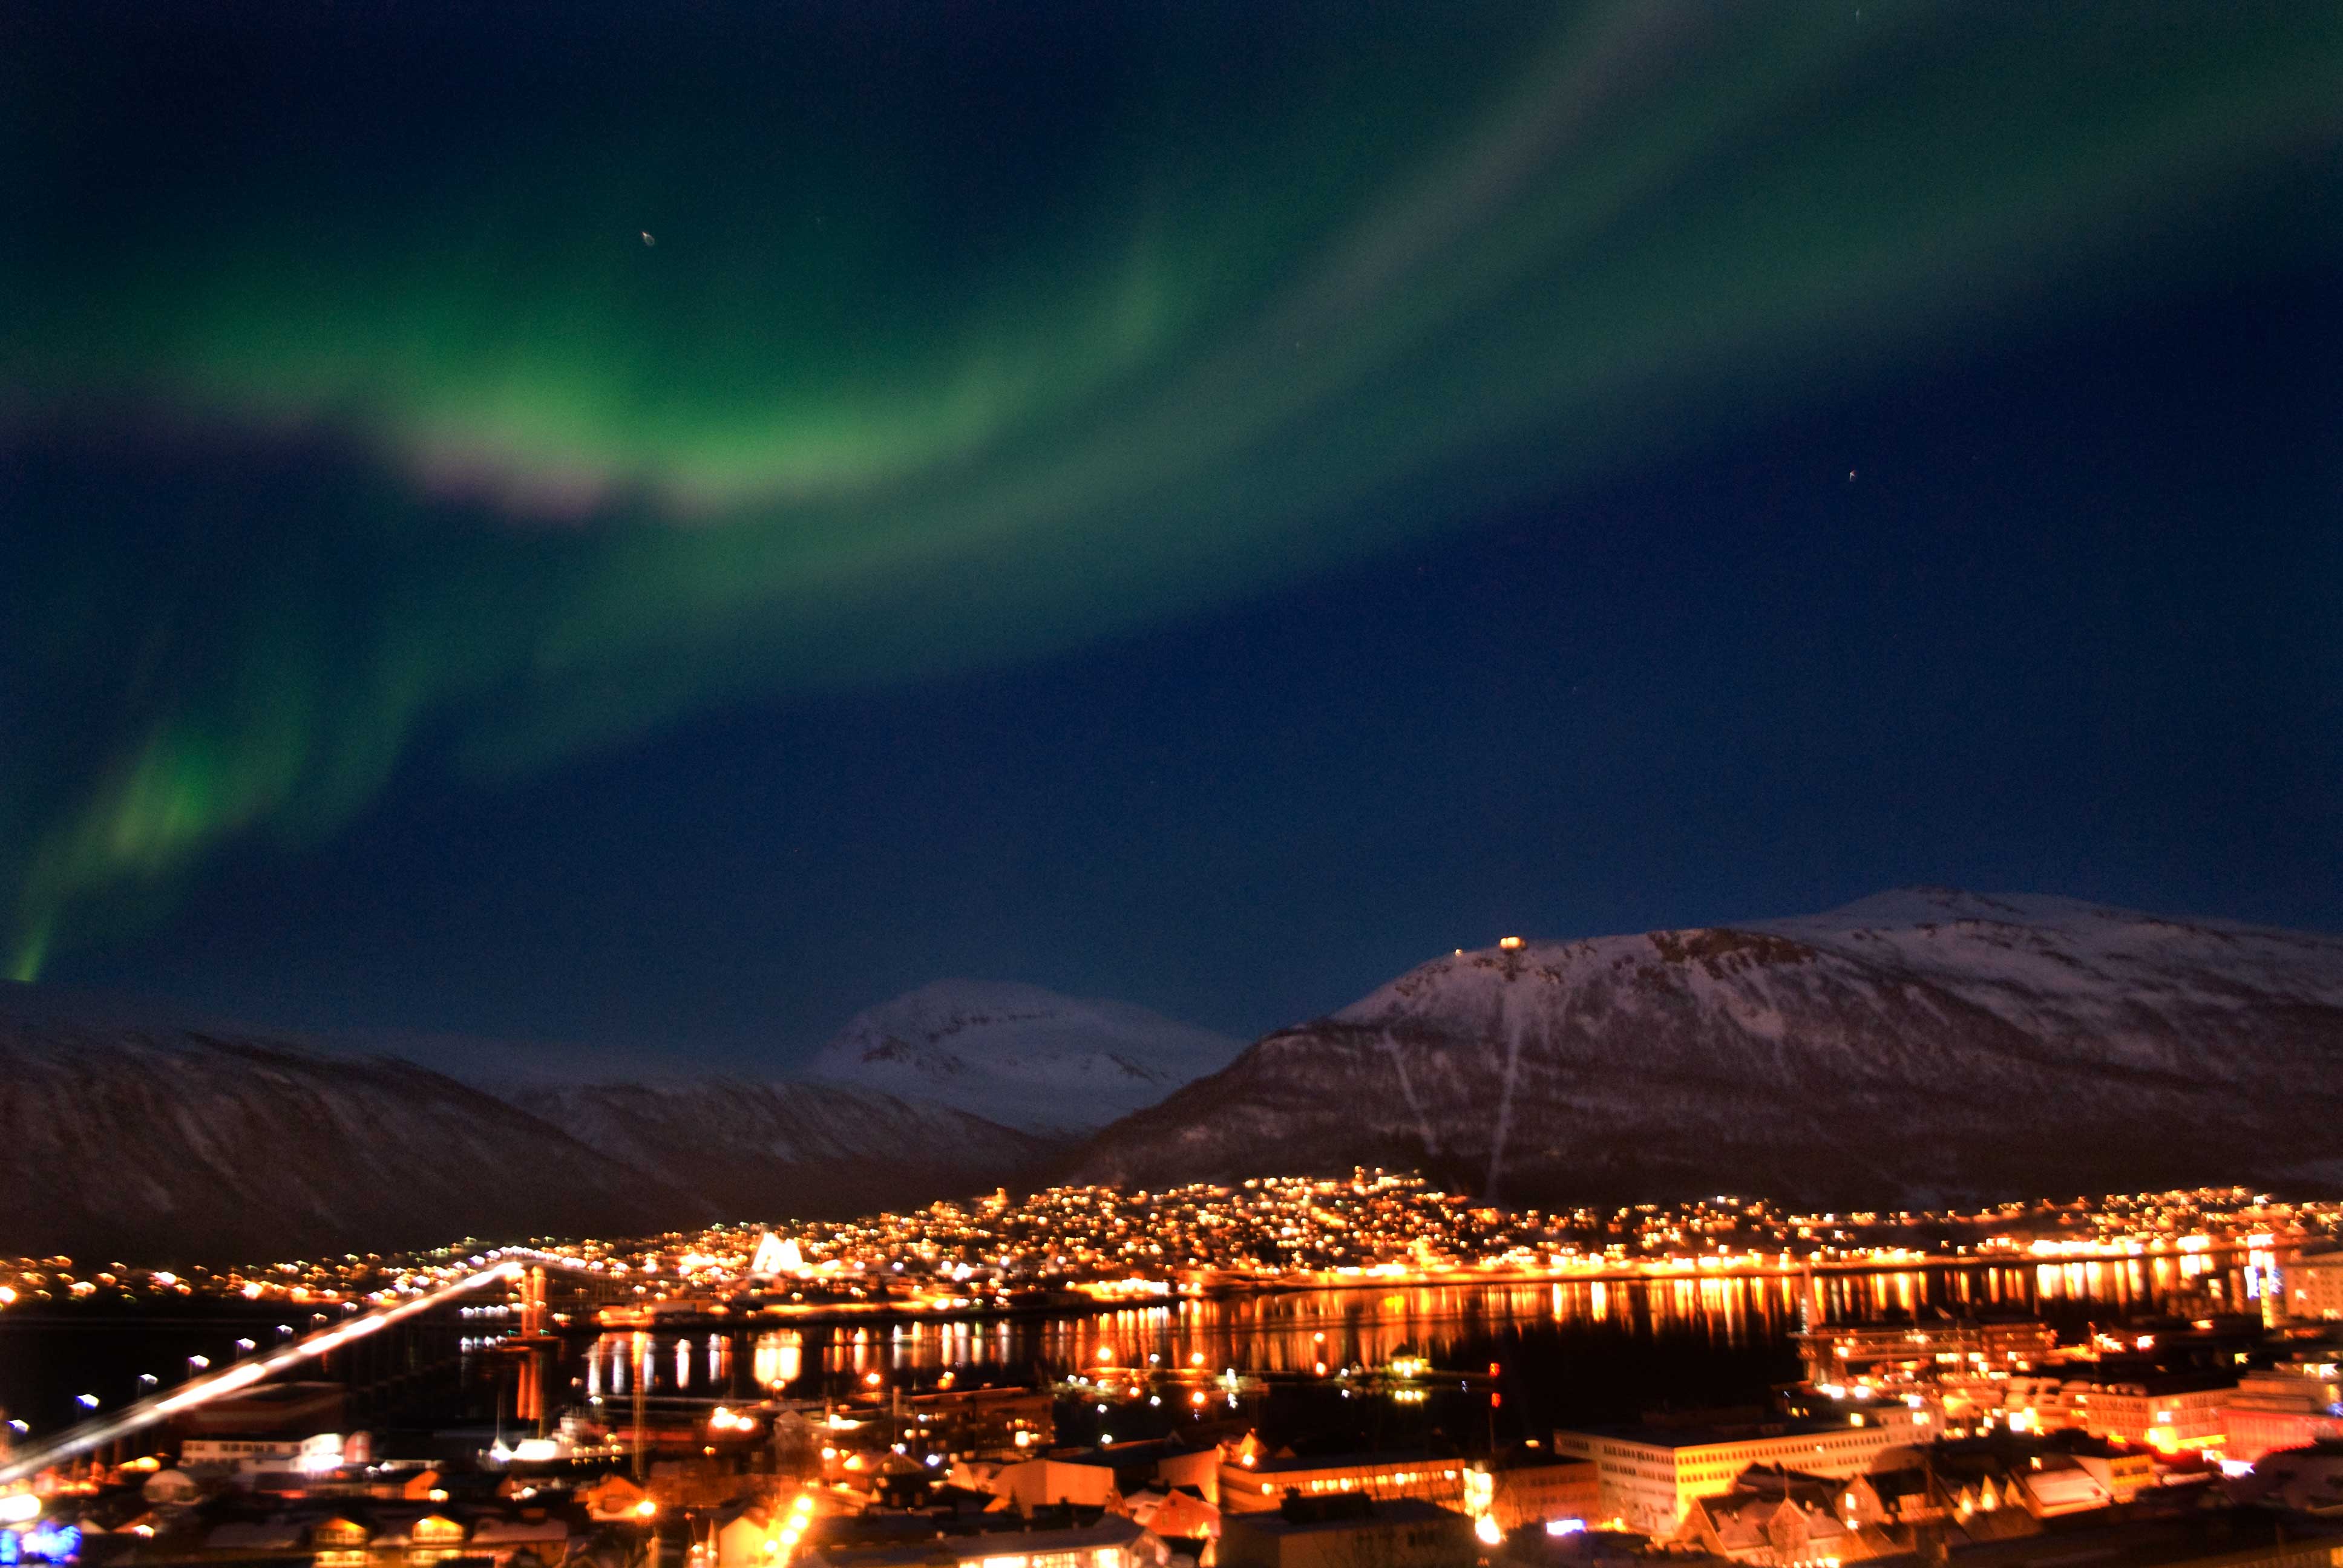 Northern lights over Tromsø